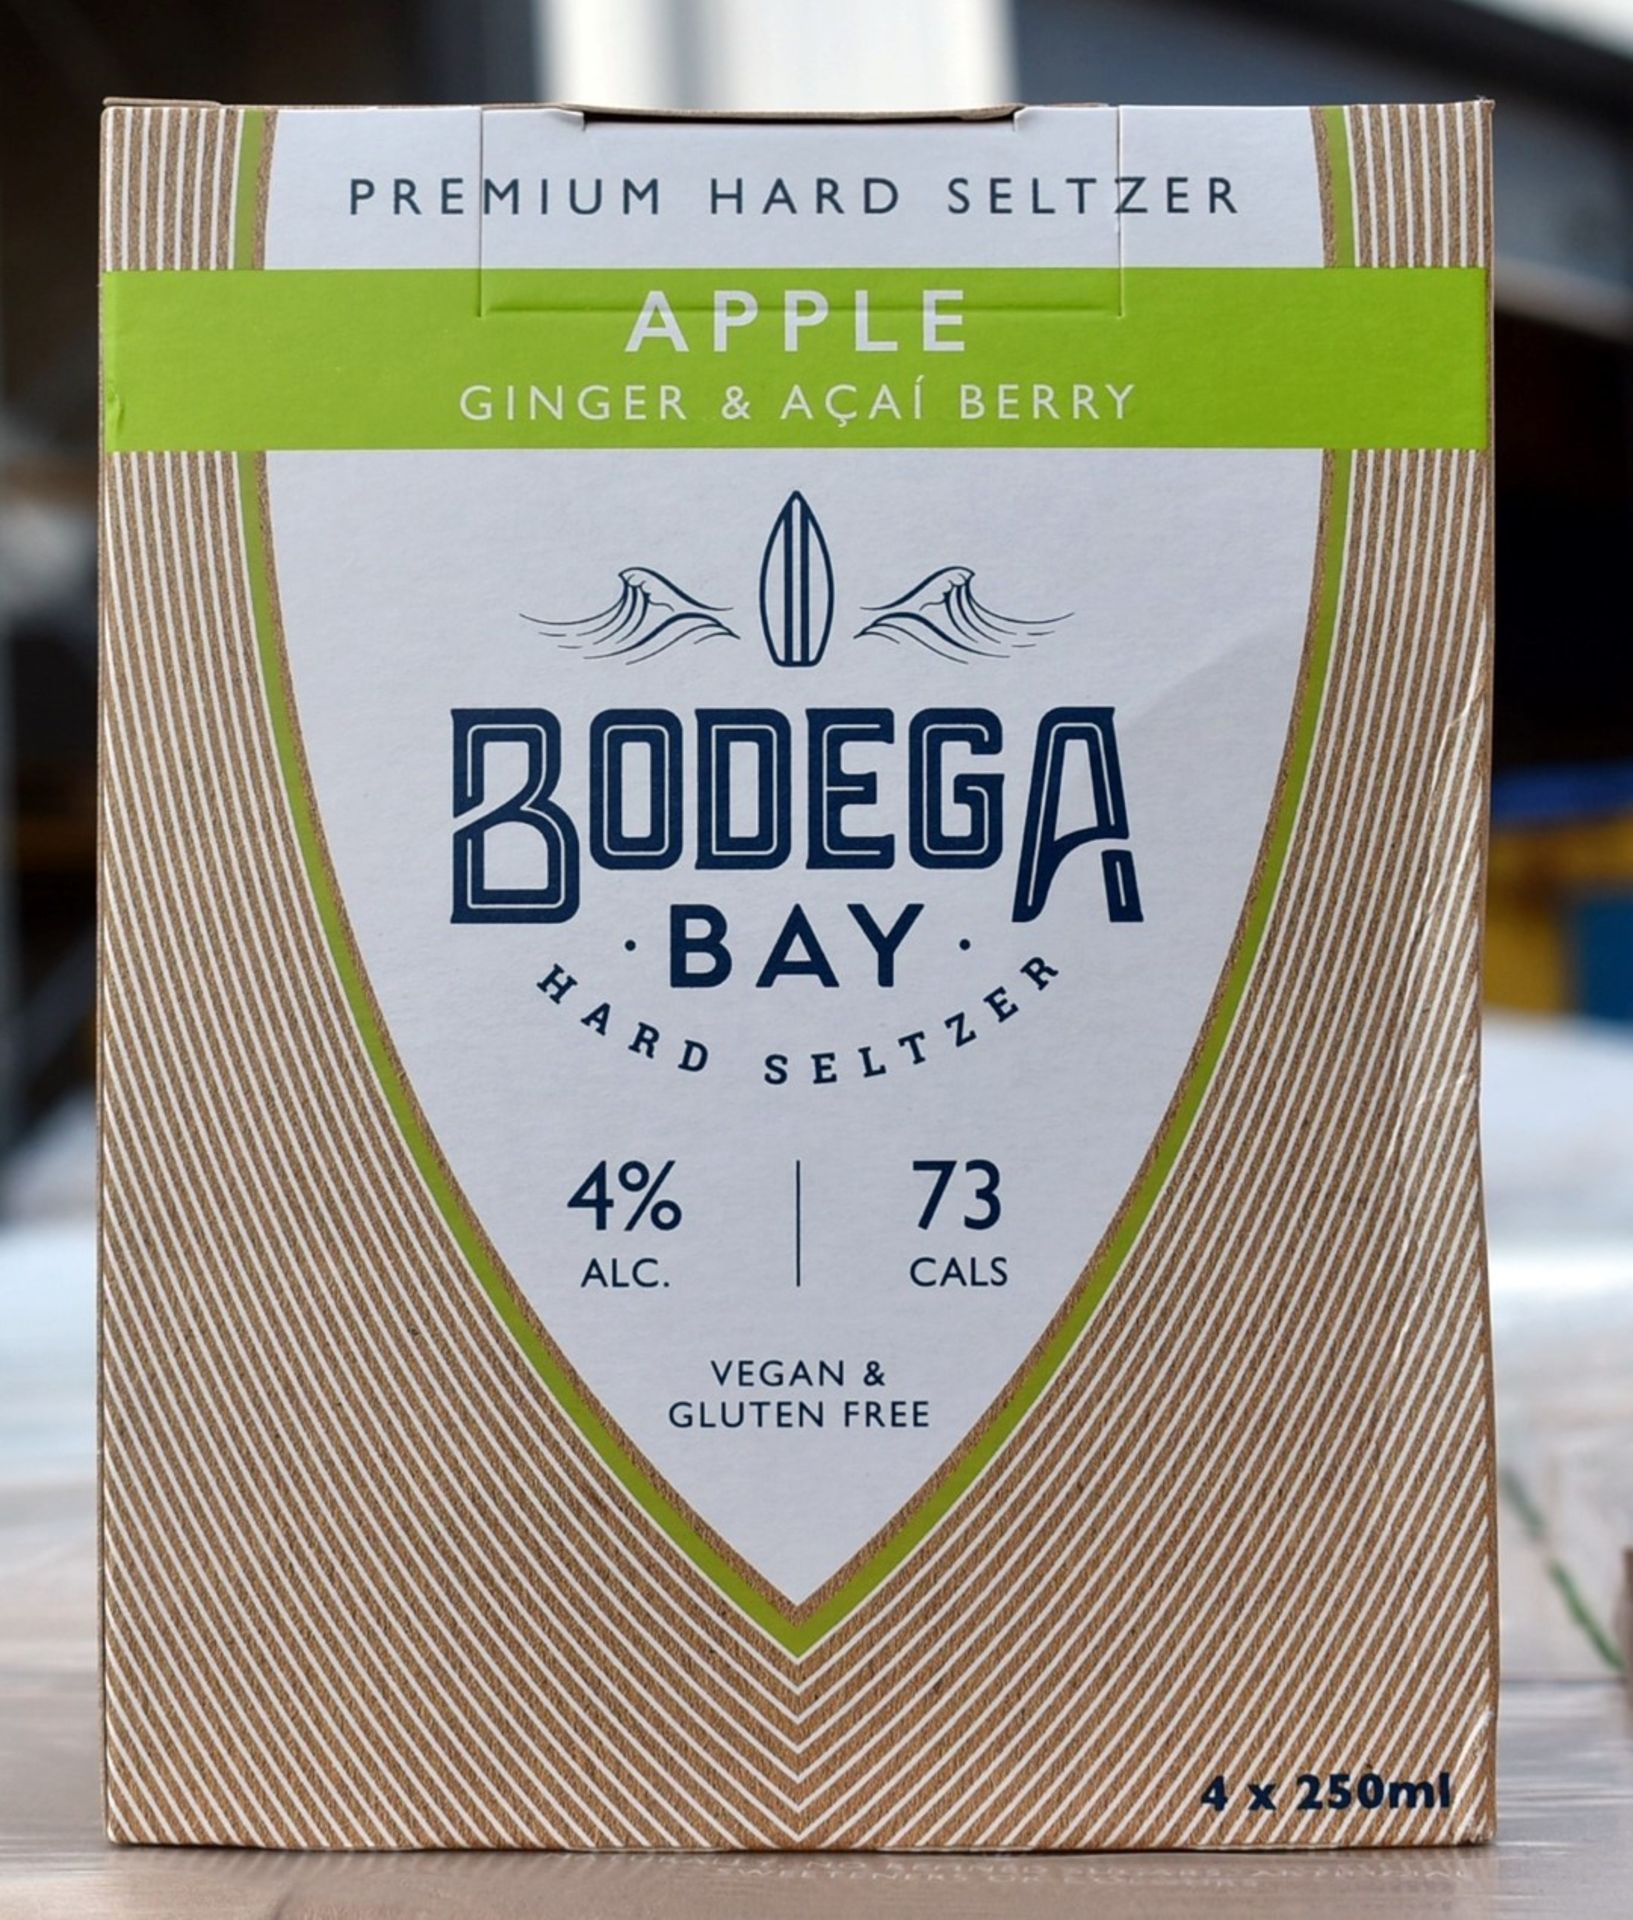 24 x Bodega Bay Hard Seltzer 250ml Alcoholic Sparkling Water Drinks - Apple Ginger & Acai Berry - 4% - Image 3 of 9